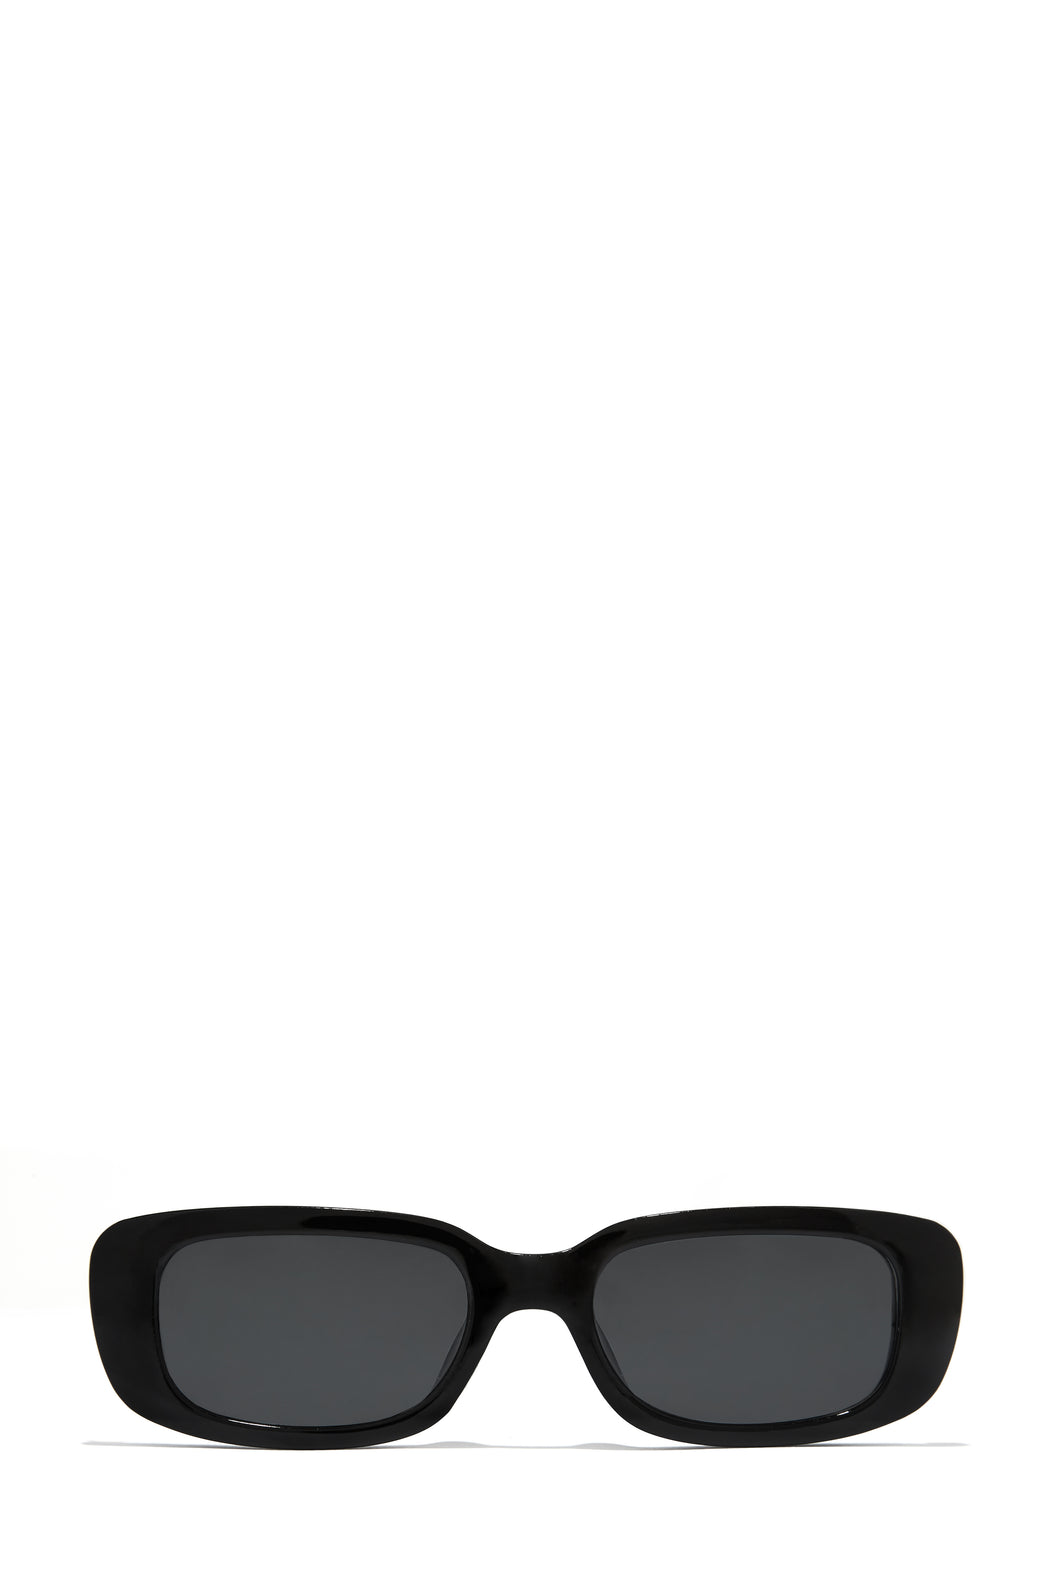 Spring Black Sunglasses